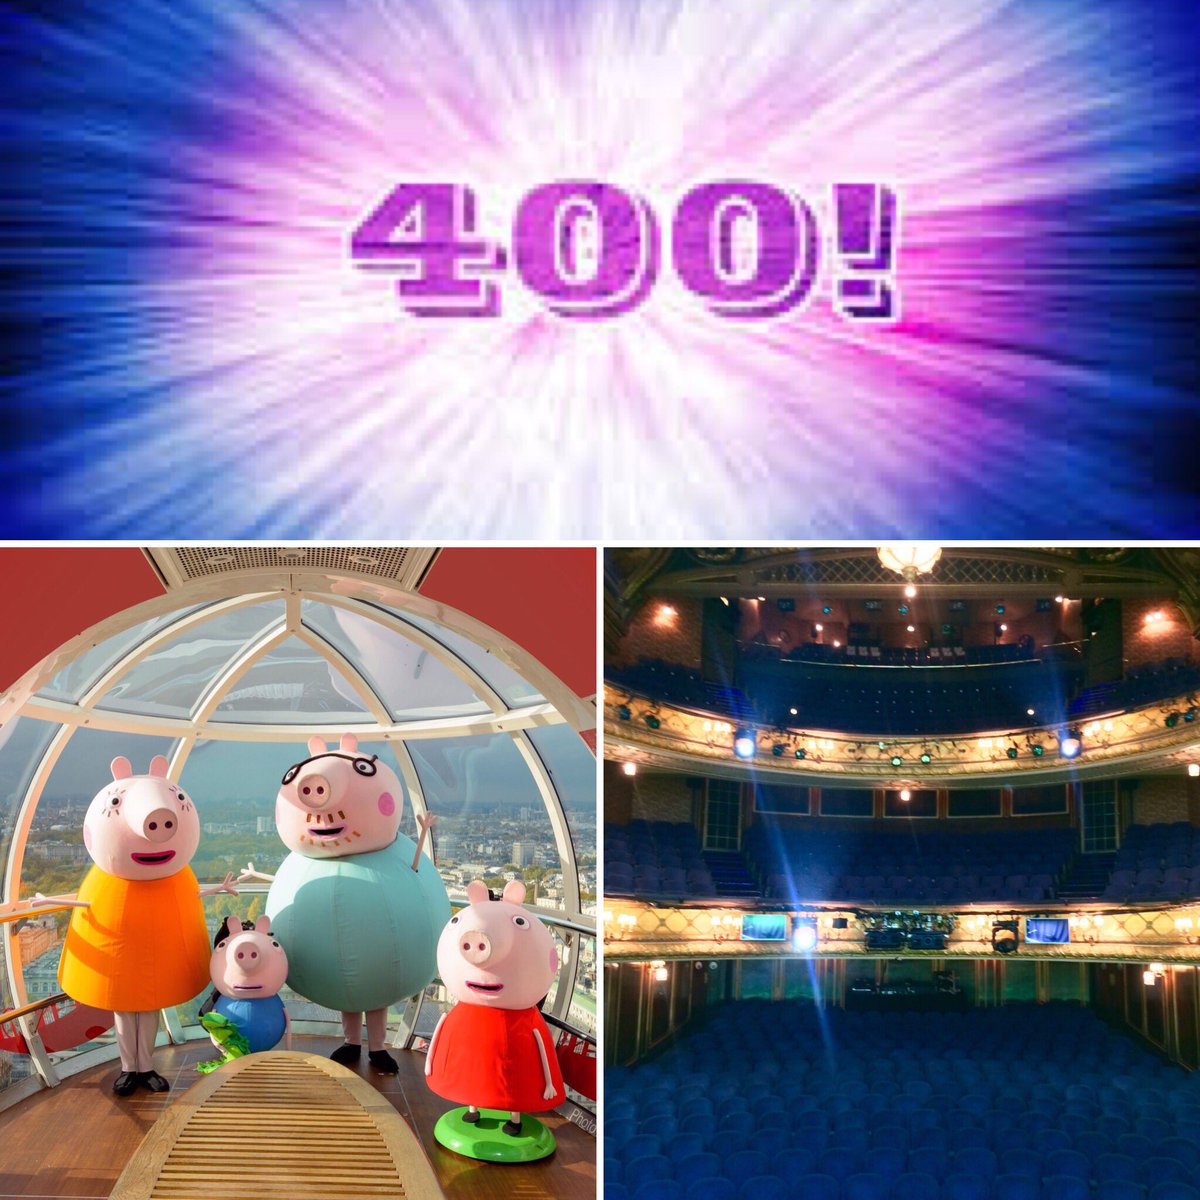 It's show 400 of Peppa Pig's Adventure!! 🎉🐽🎉🐷🎉 #peppapiglive #400th @Limelight_Group @FieryAngelHQ  #landmark